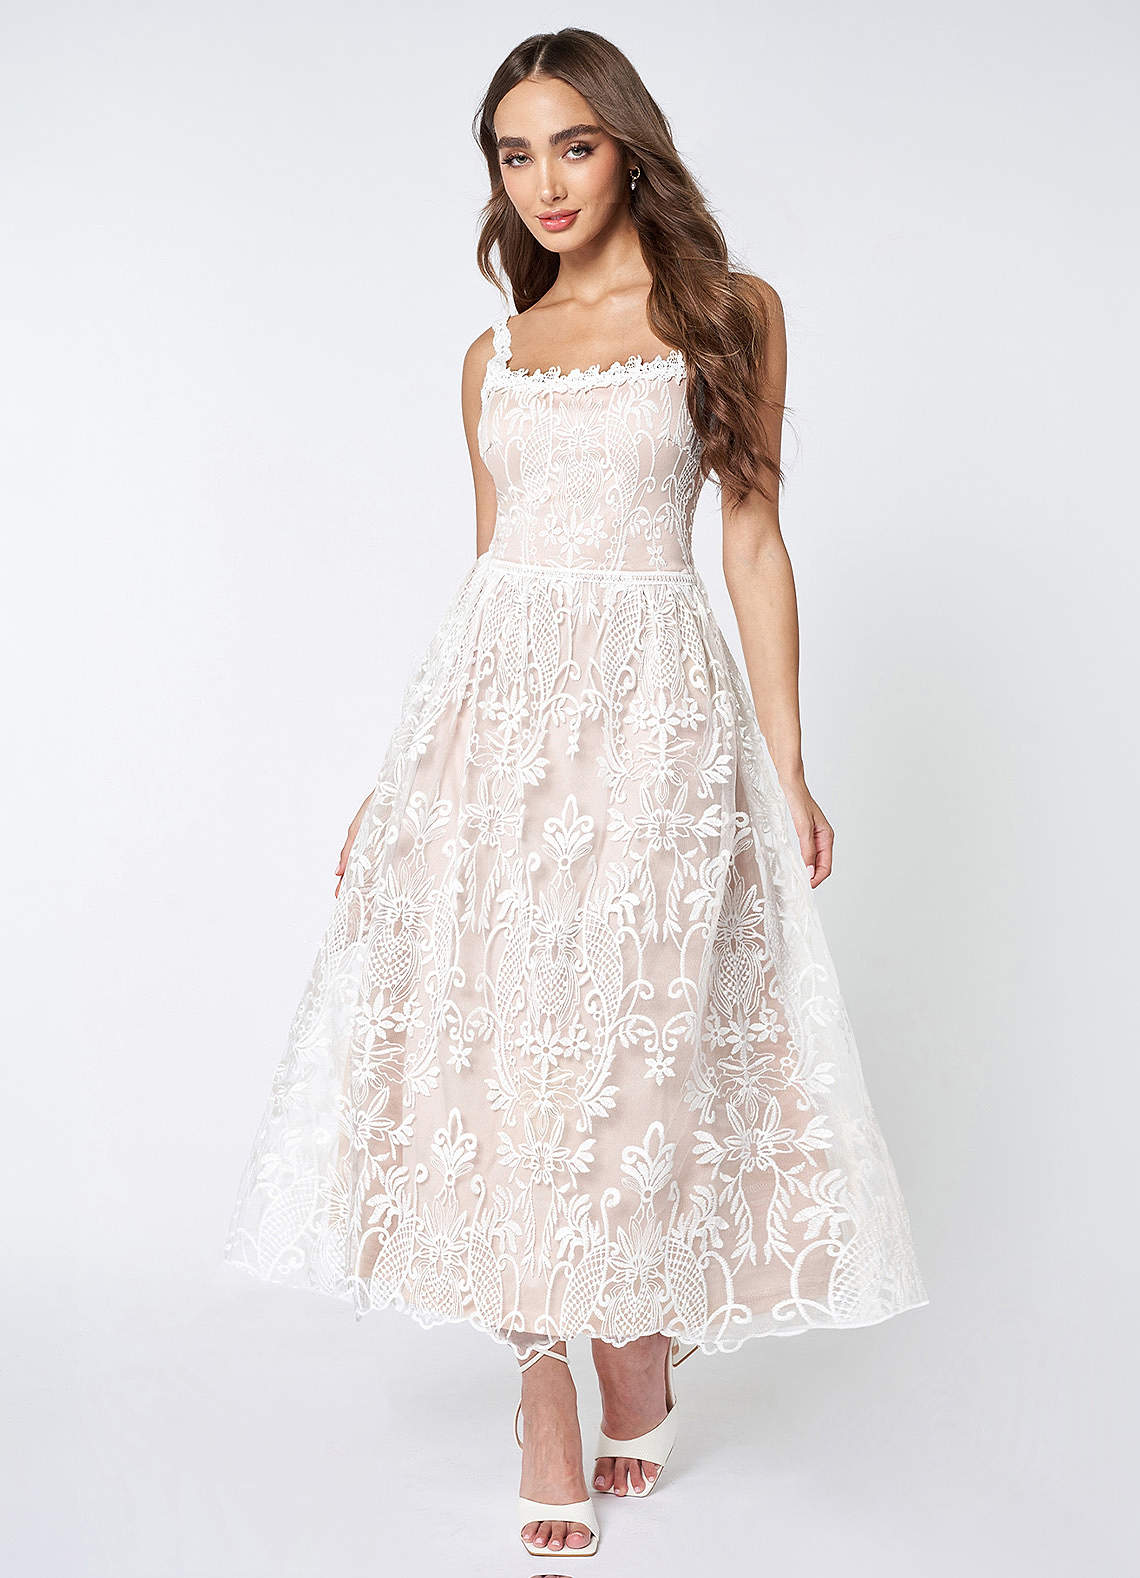 My Dearest White Lace Sleeveless Midi Dress image1